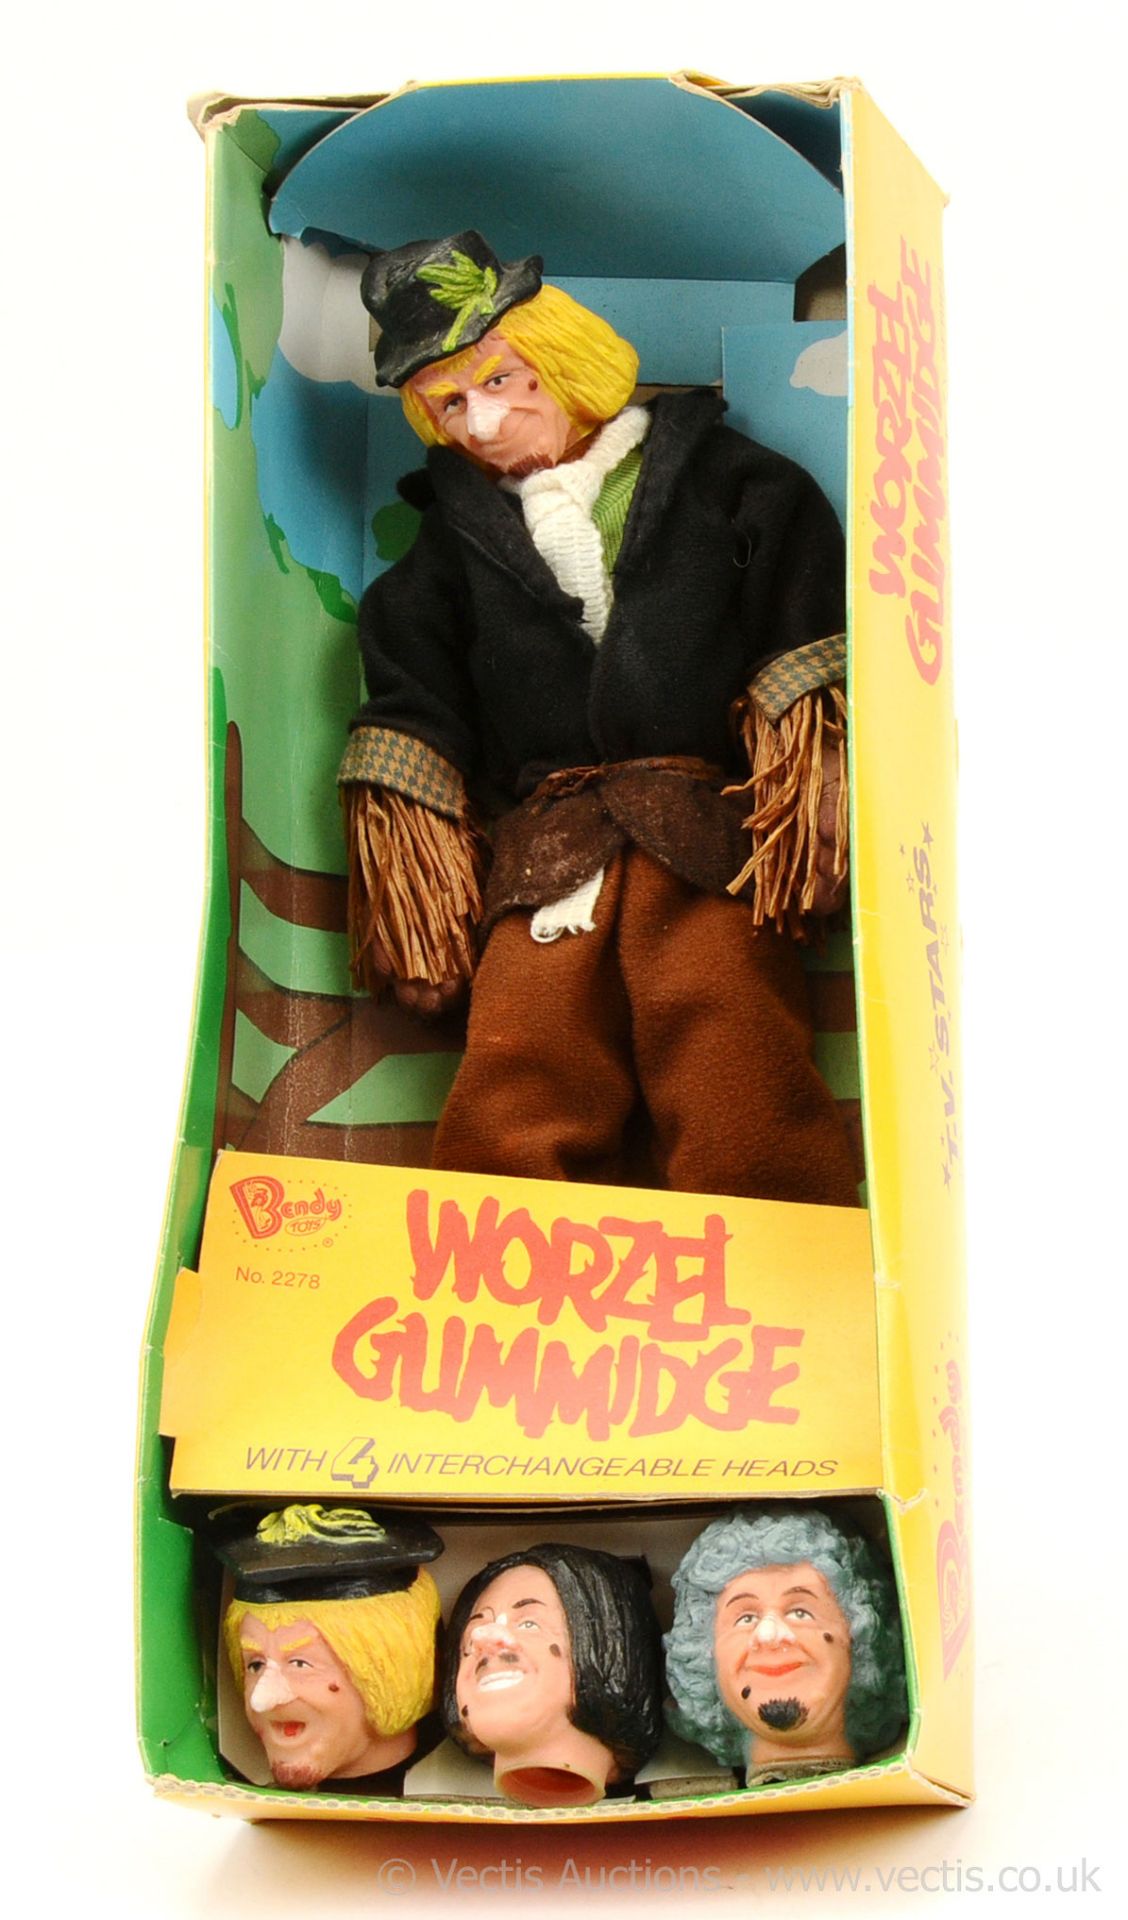 Bendy Toys Worzel Gummidge 12" figure